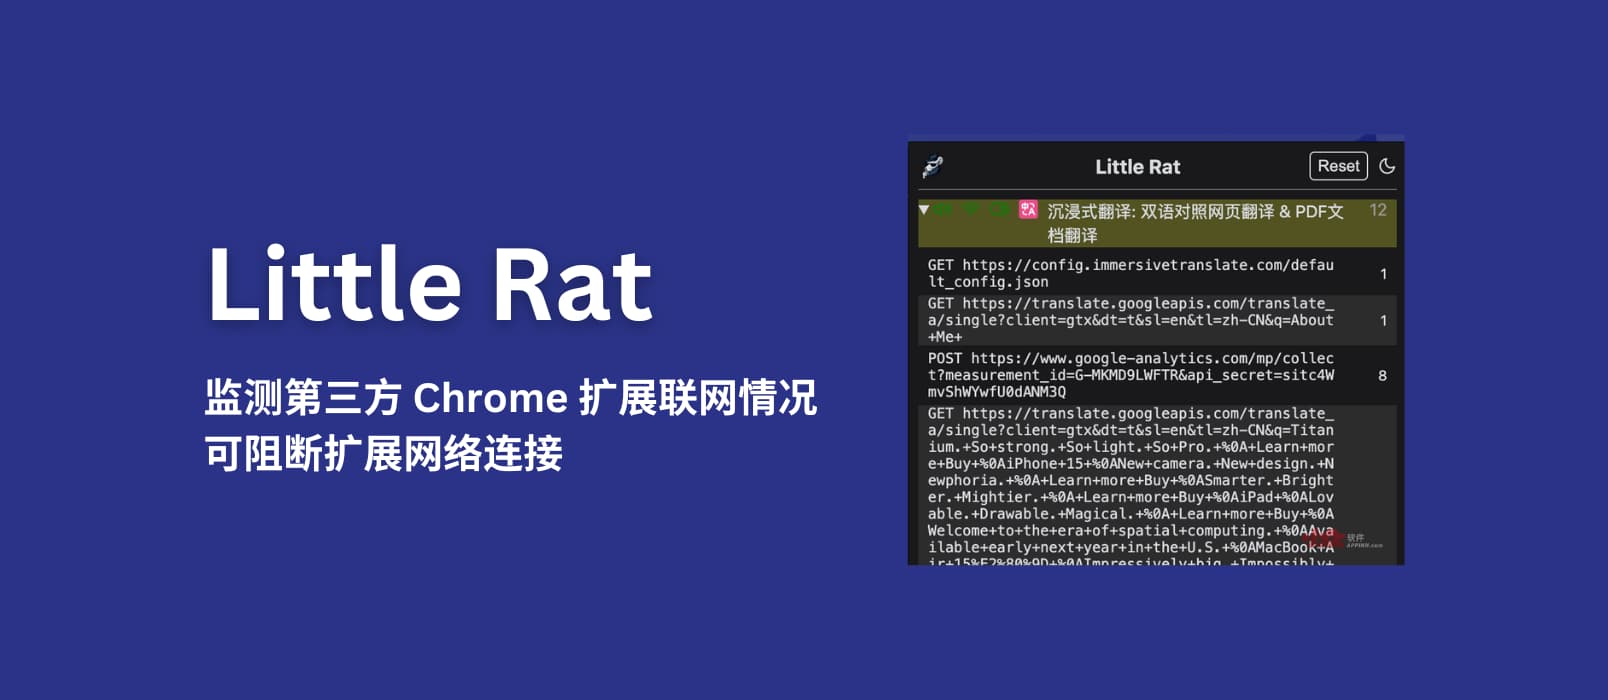 Little Rat - 监测第三方 Chrome 扩展联网情况，可阻断扩展网络连接 1